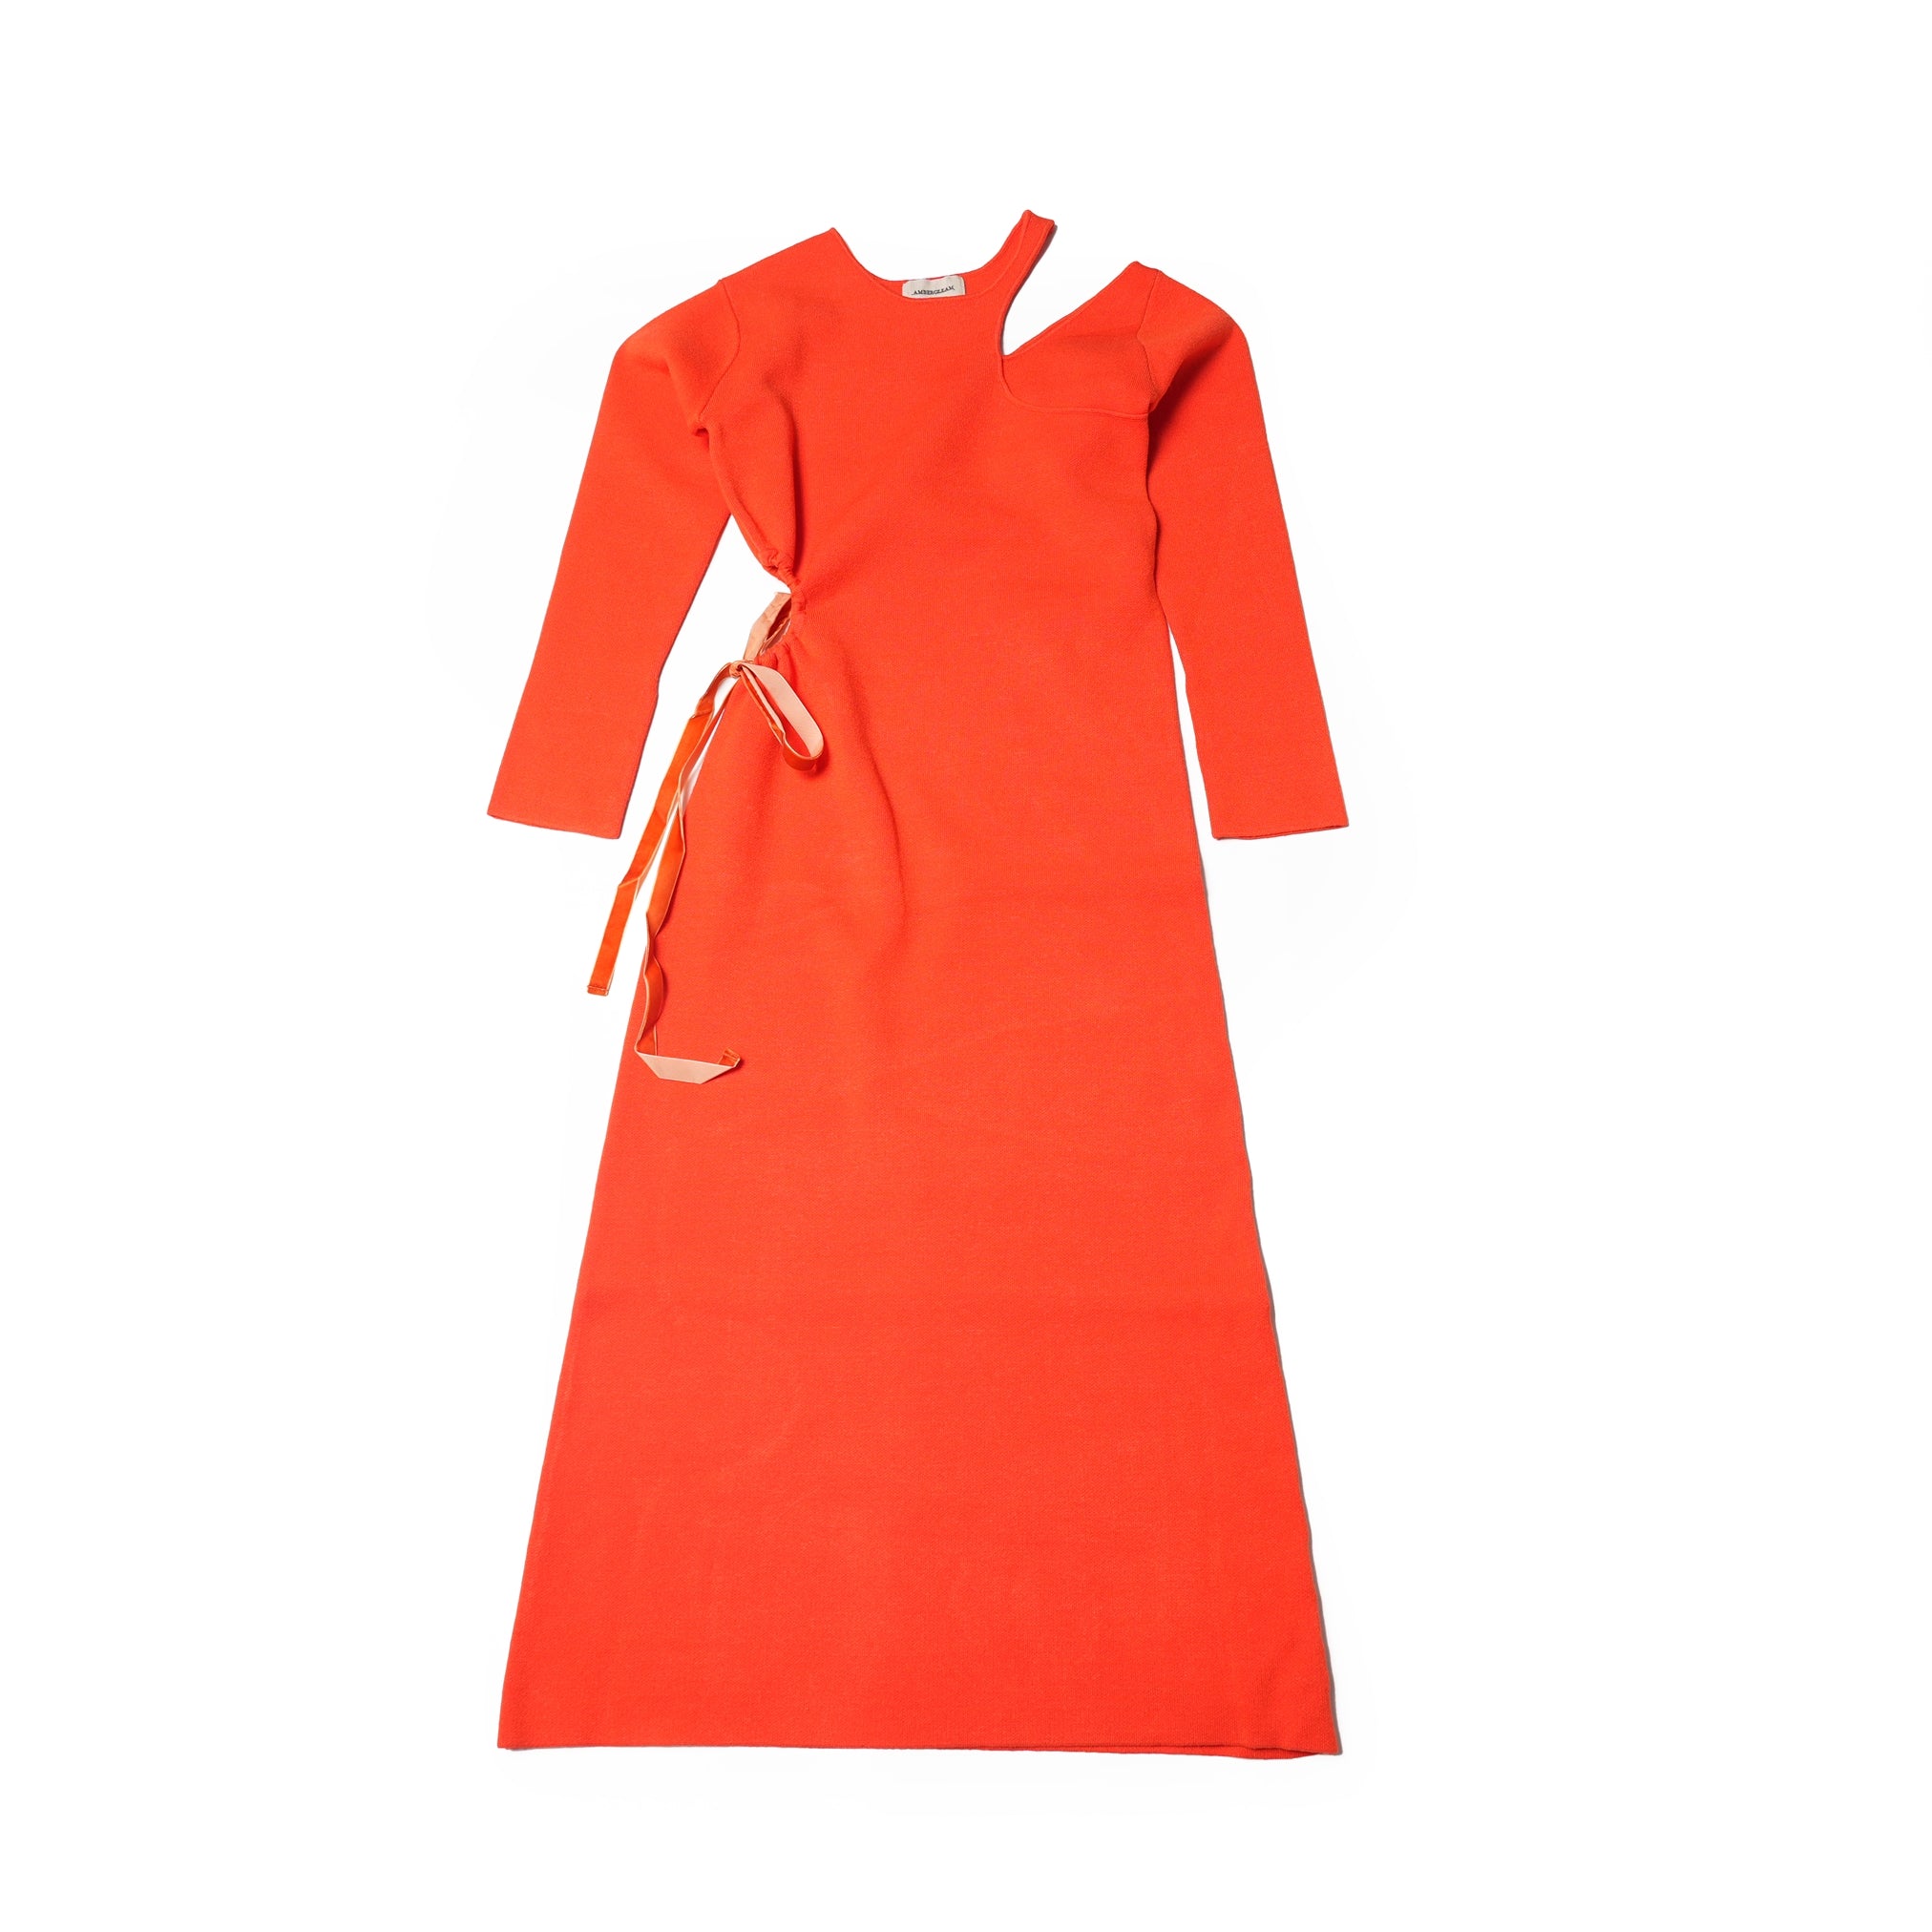 Name:Art Knit Dress | Color:Black / Valencia Orange【AMBERGLEAM_アンバーグリーム】| No:1149131218